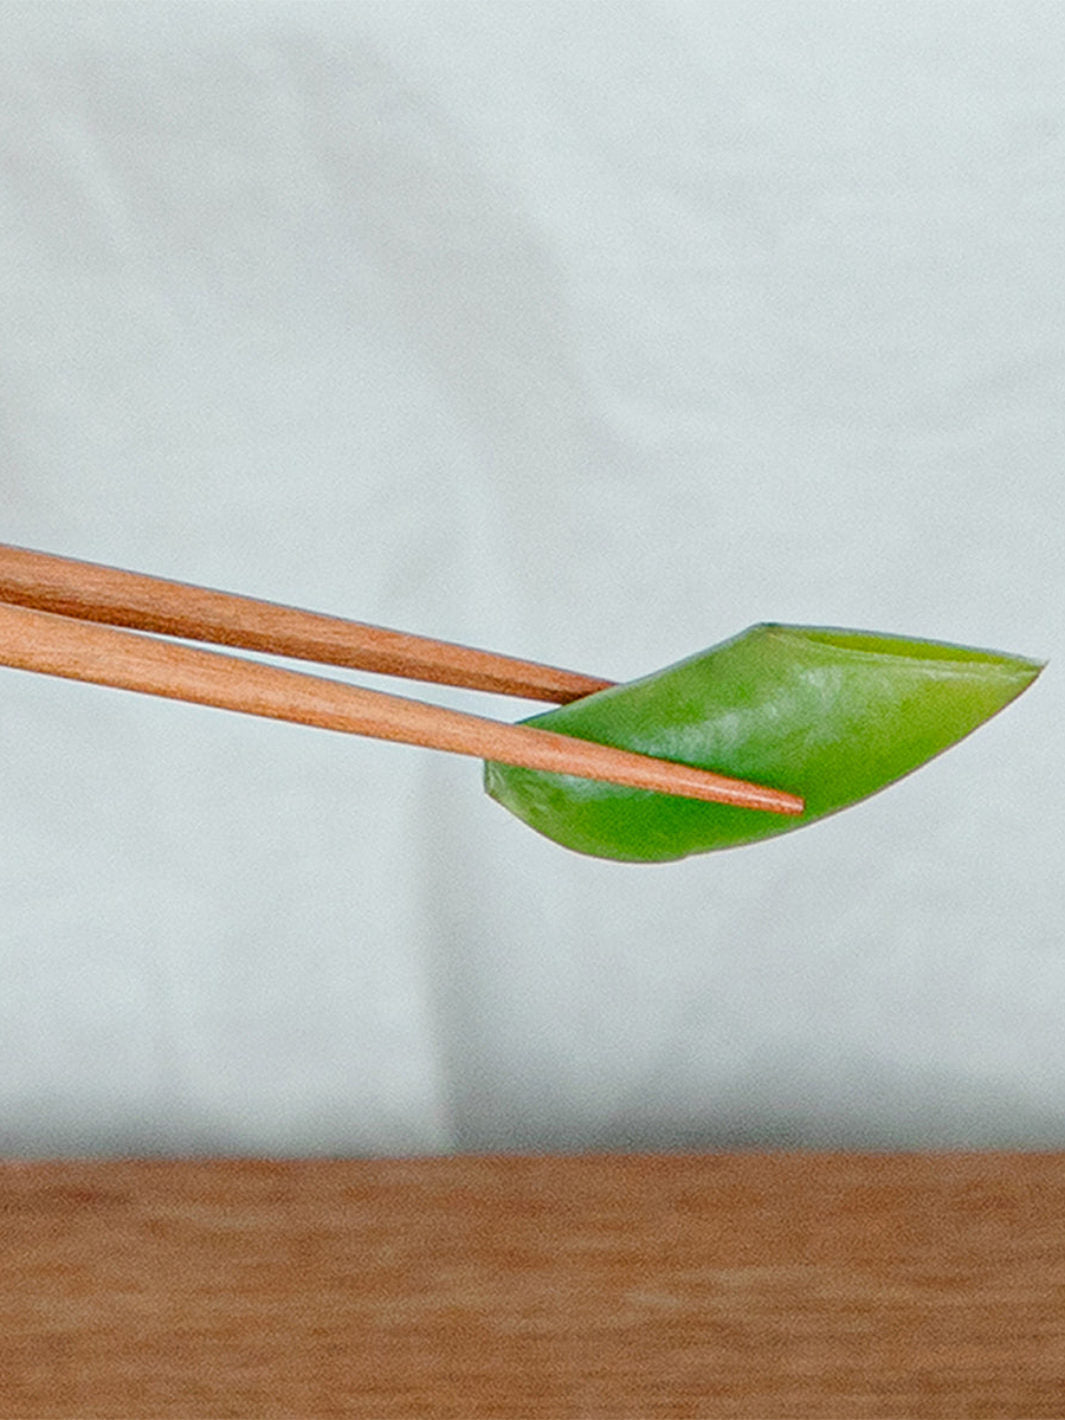 KINTO HIBI Chopsticks (235mm/9.4in)